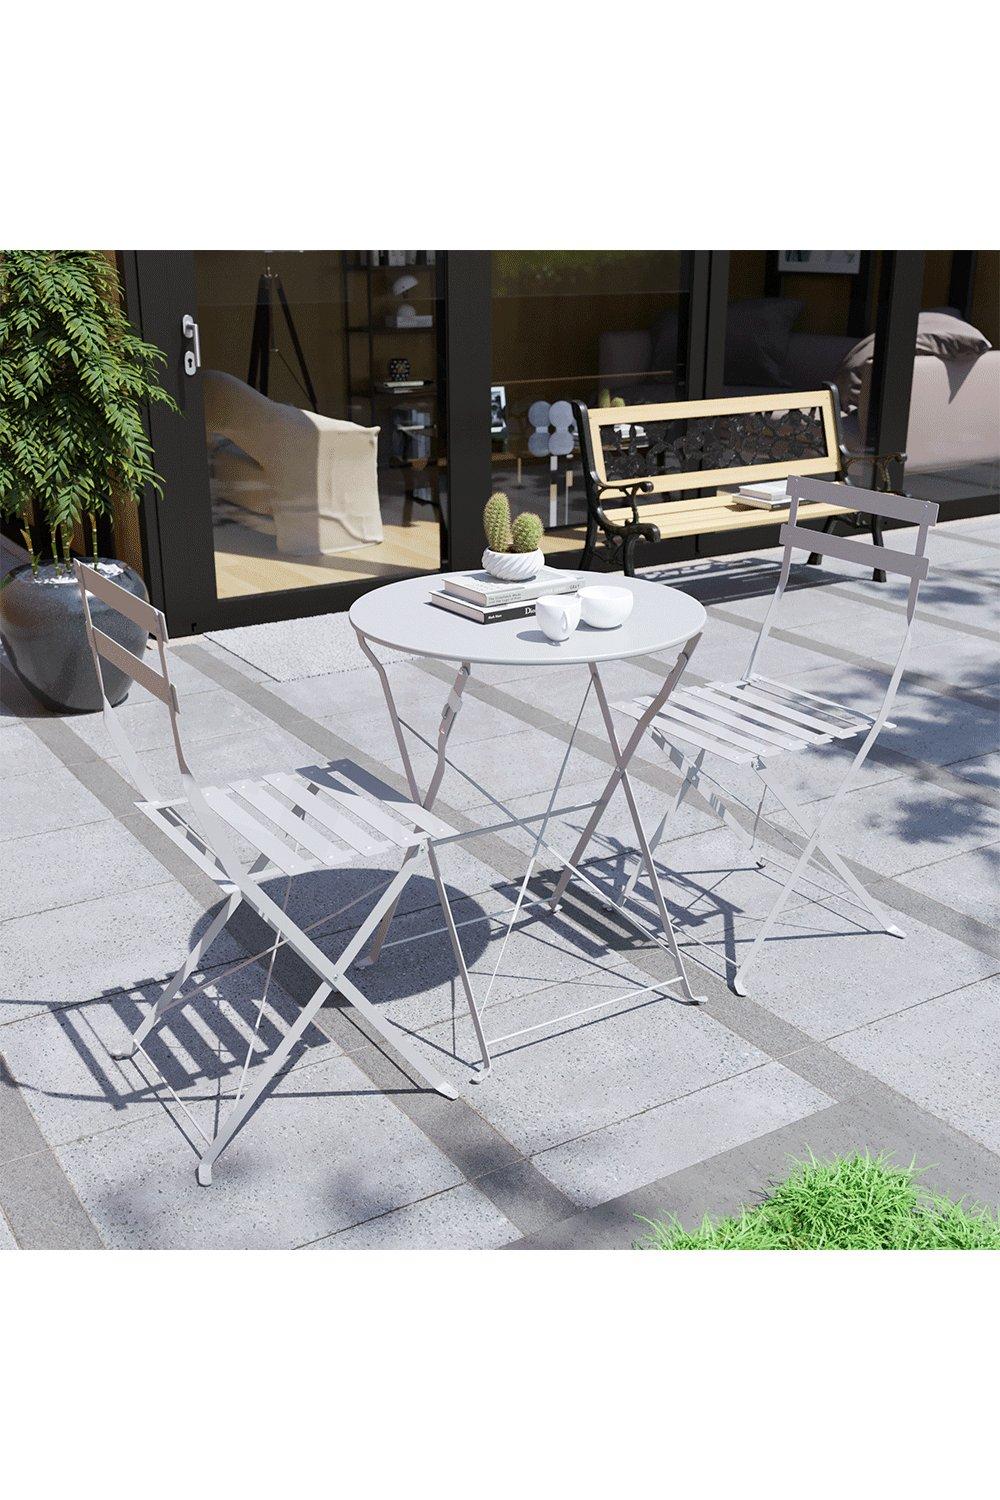 Garden Vida Porto 2 Seater Metal Bistro Set Garden Furniture - 2 Chairs and Table